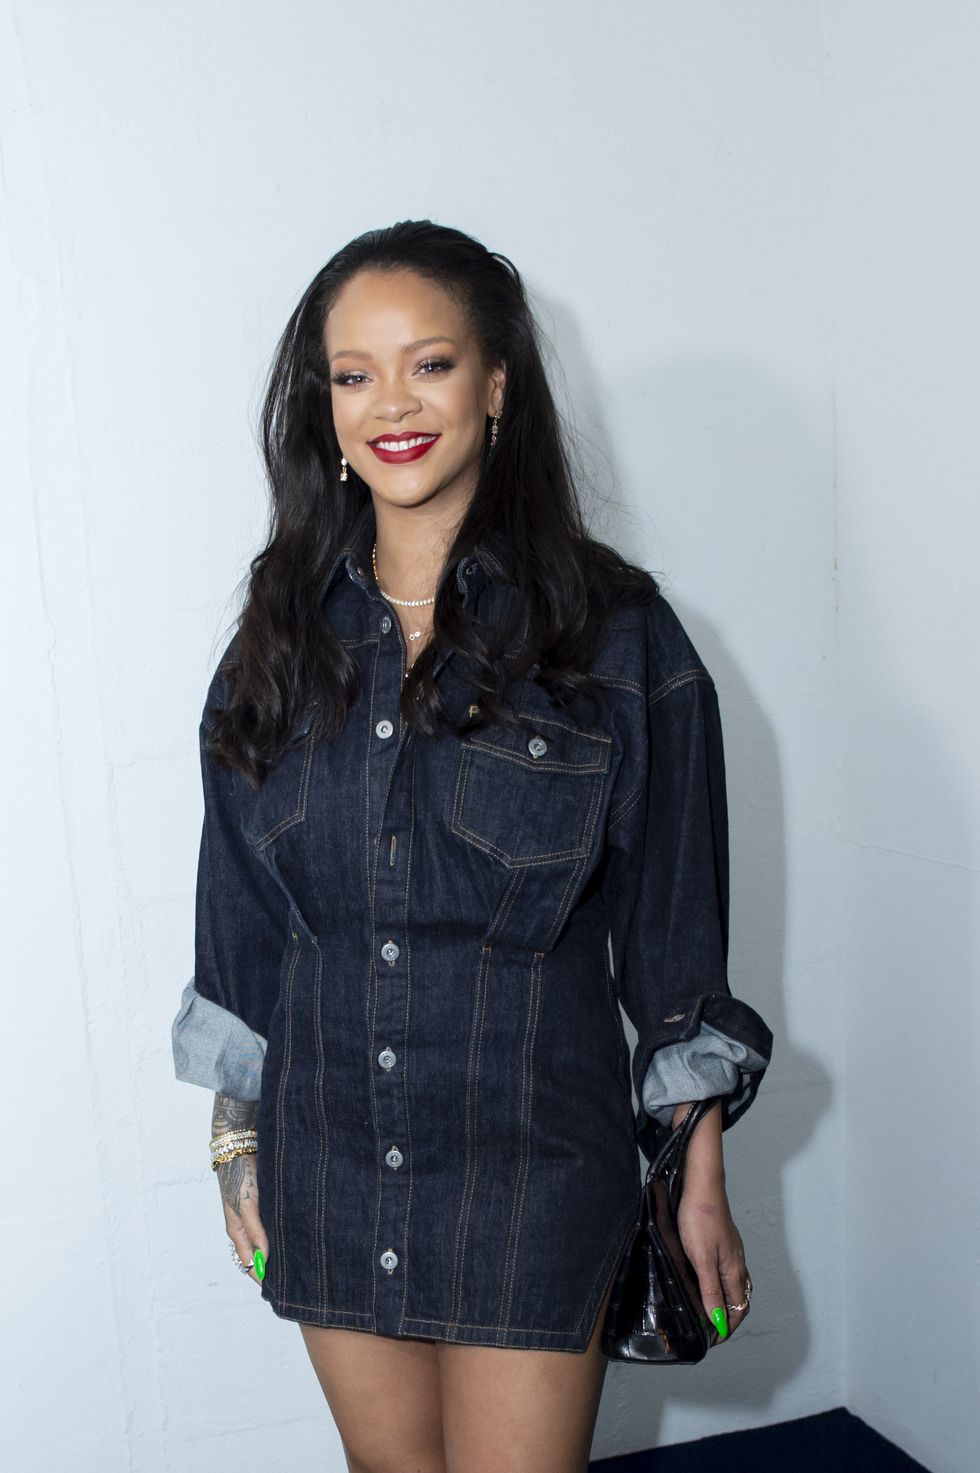 Rihanna and LVMH Hit Pause on Fenty, Their Fashion Line - The New